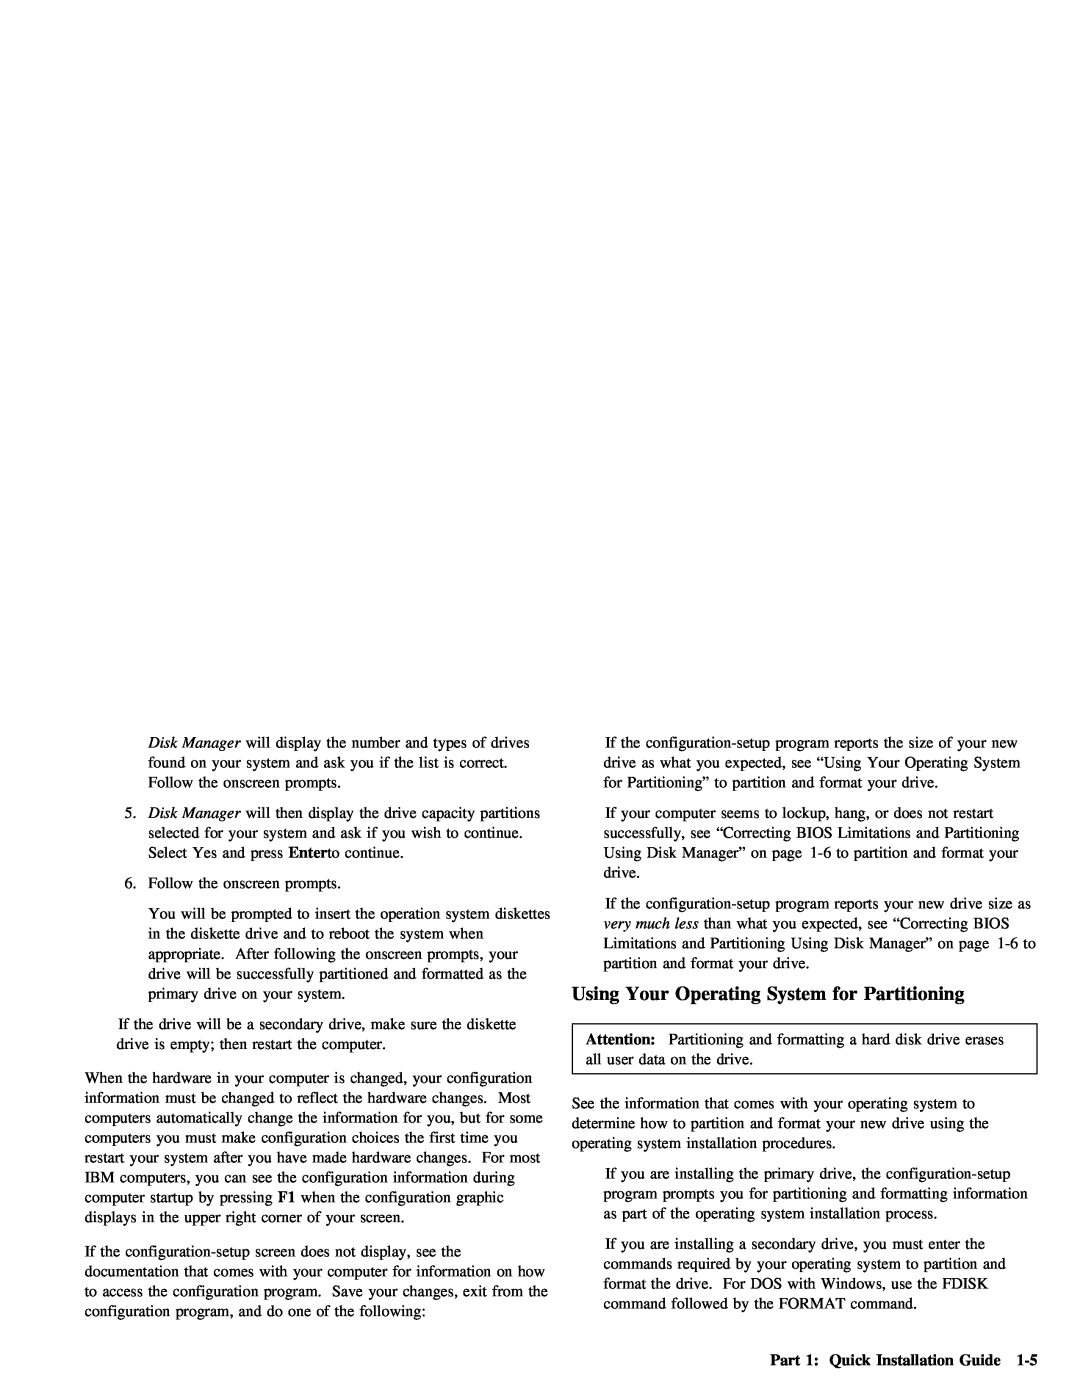 IBM ATA-3 manual Part 1 Quick Installation Guide, System 